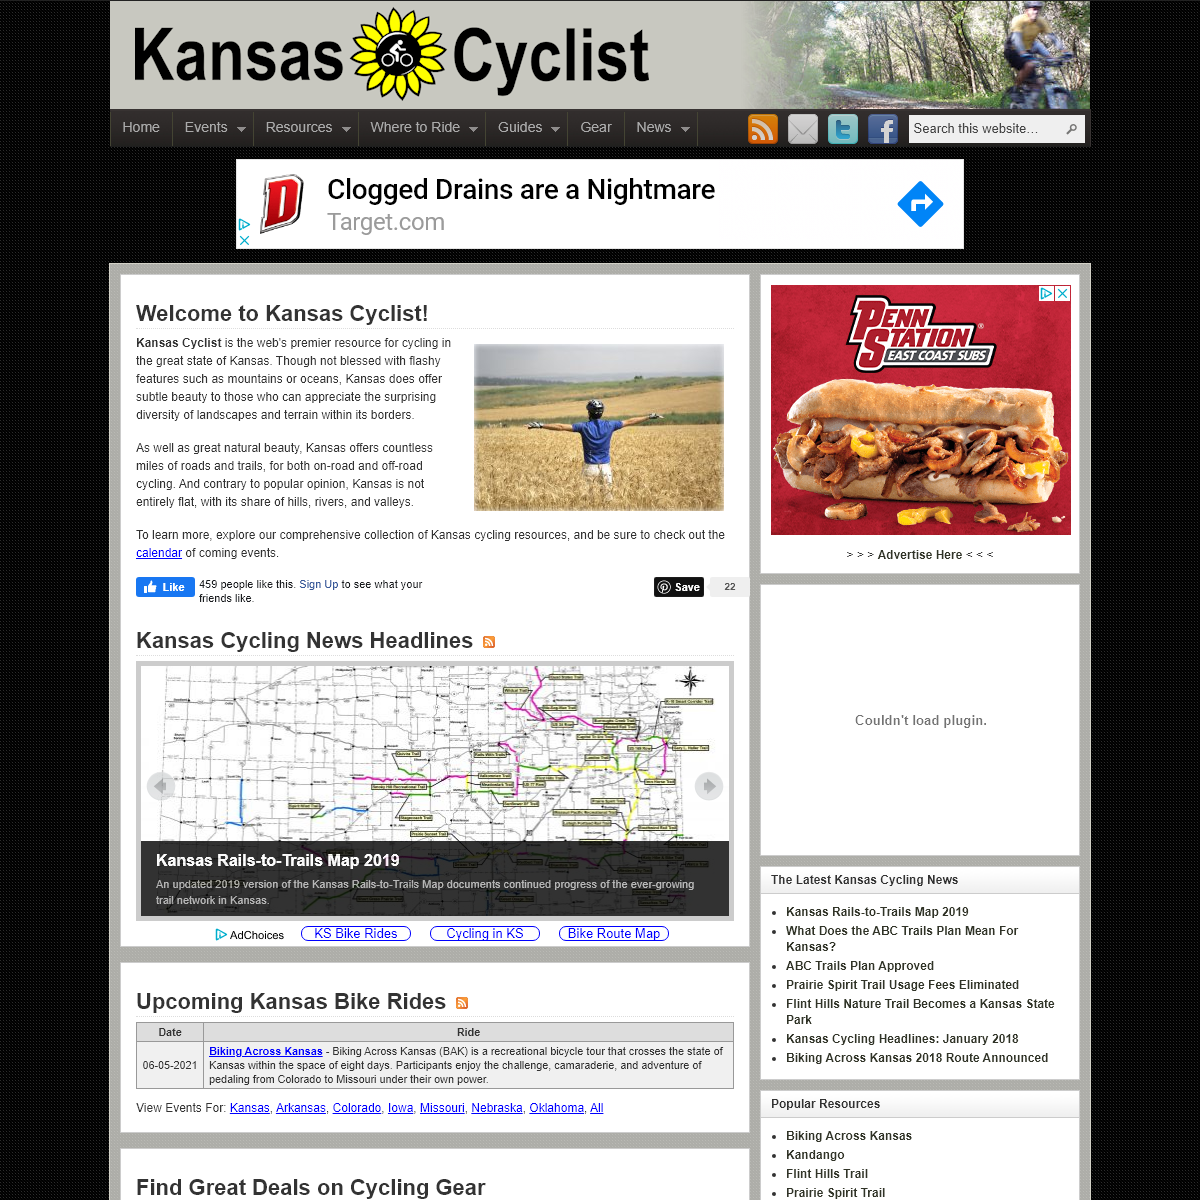 A complete backup of kansascyclist.com